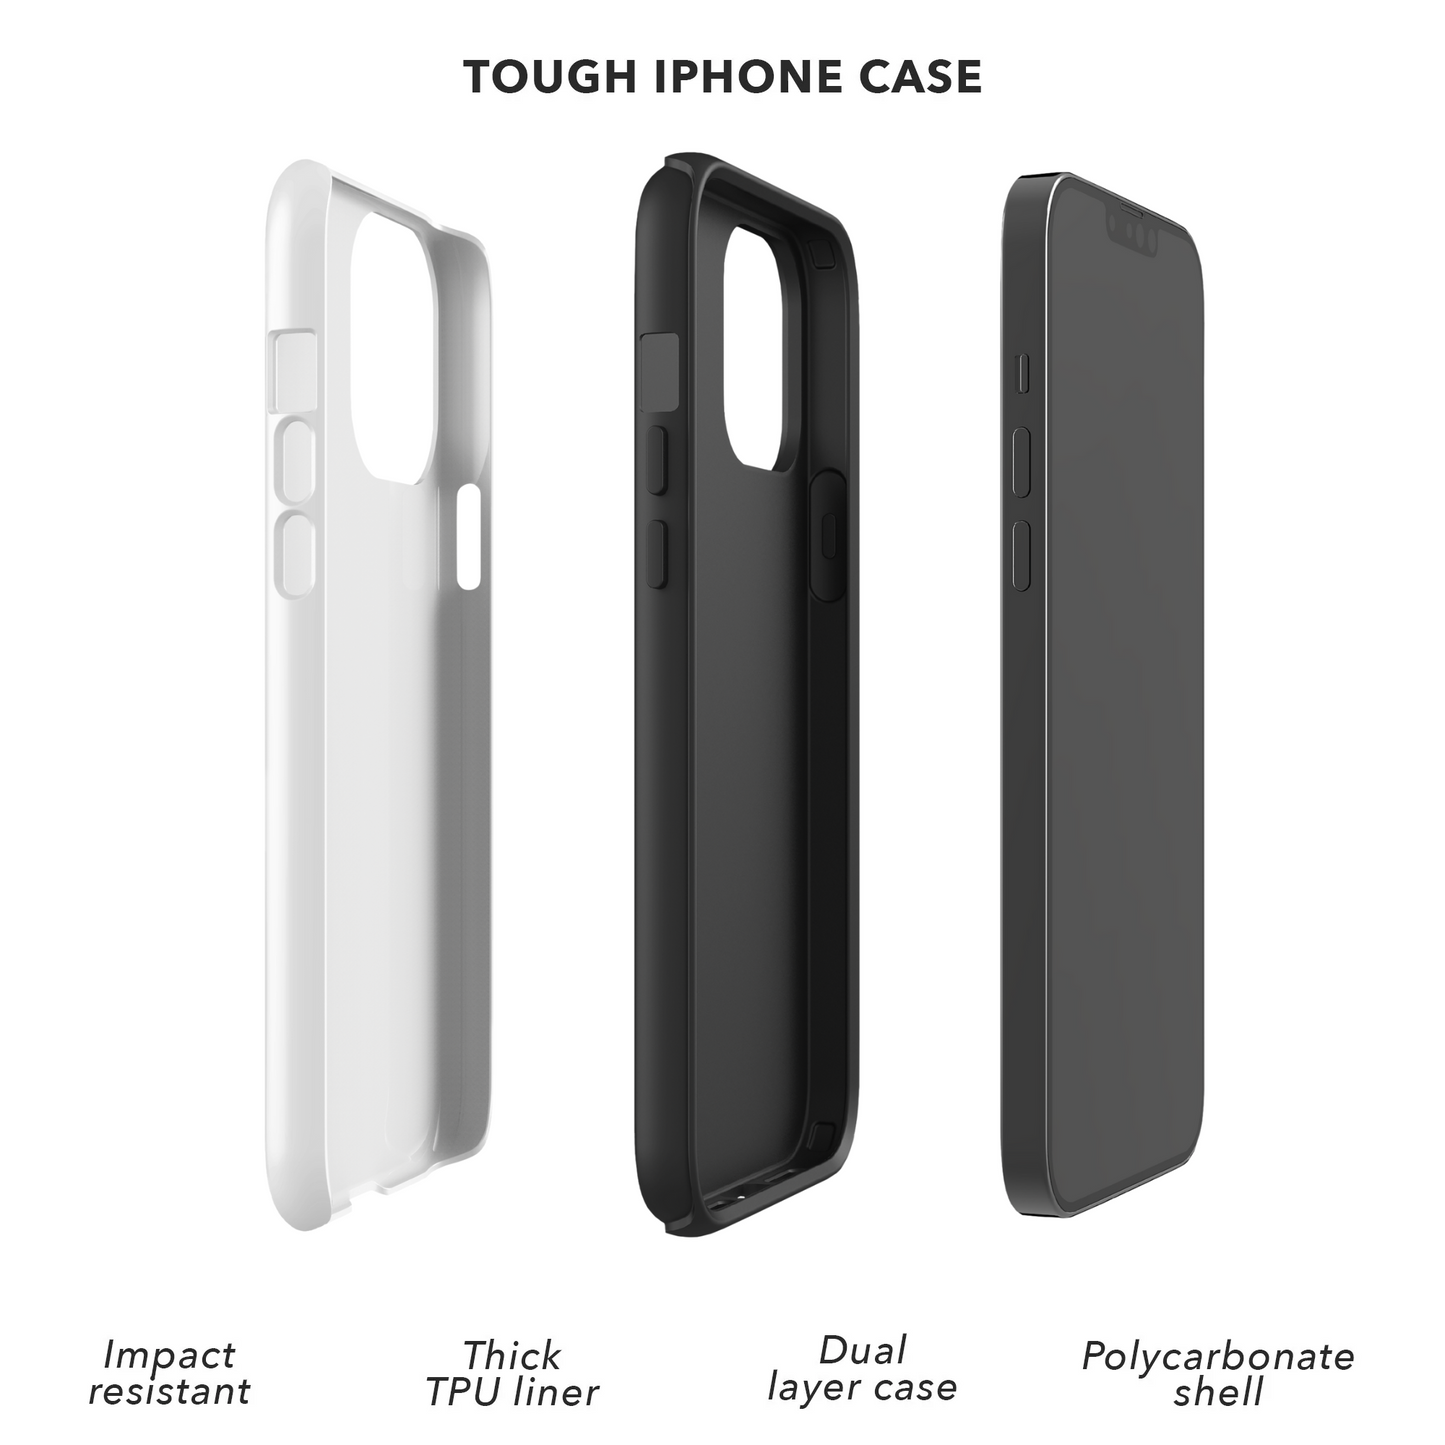 tough iphone case, durable iphone case, dual layer case, protective iphone case